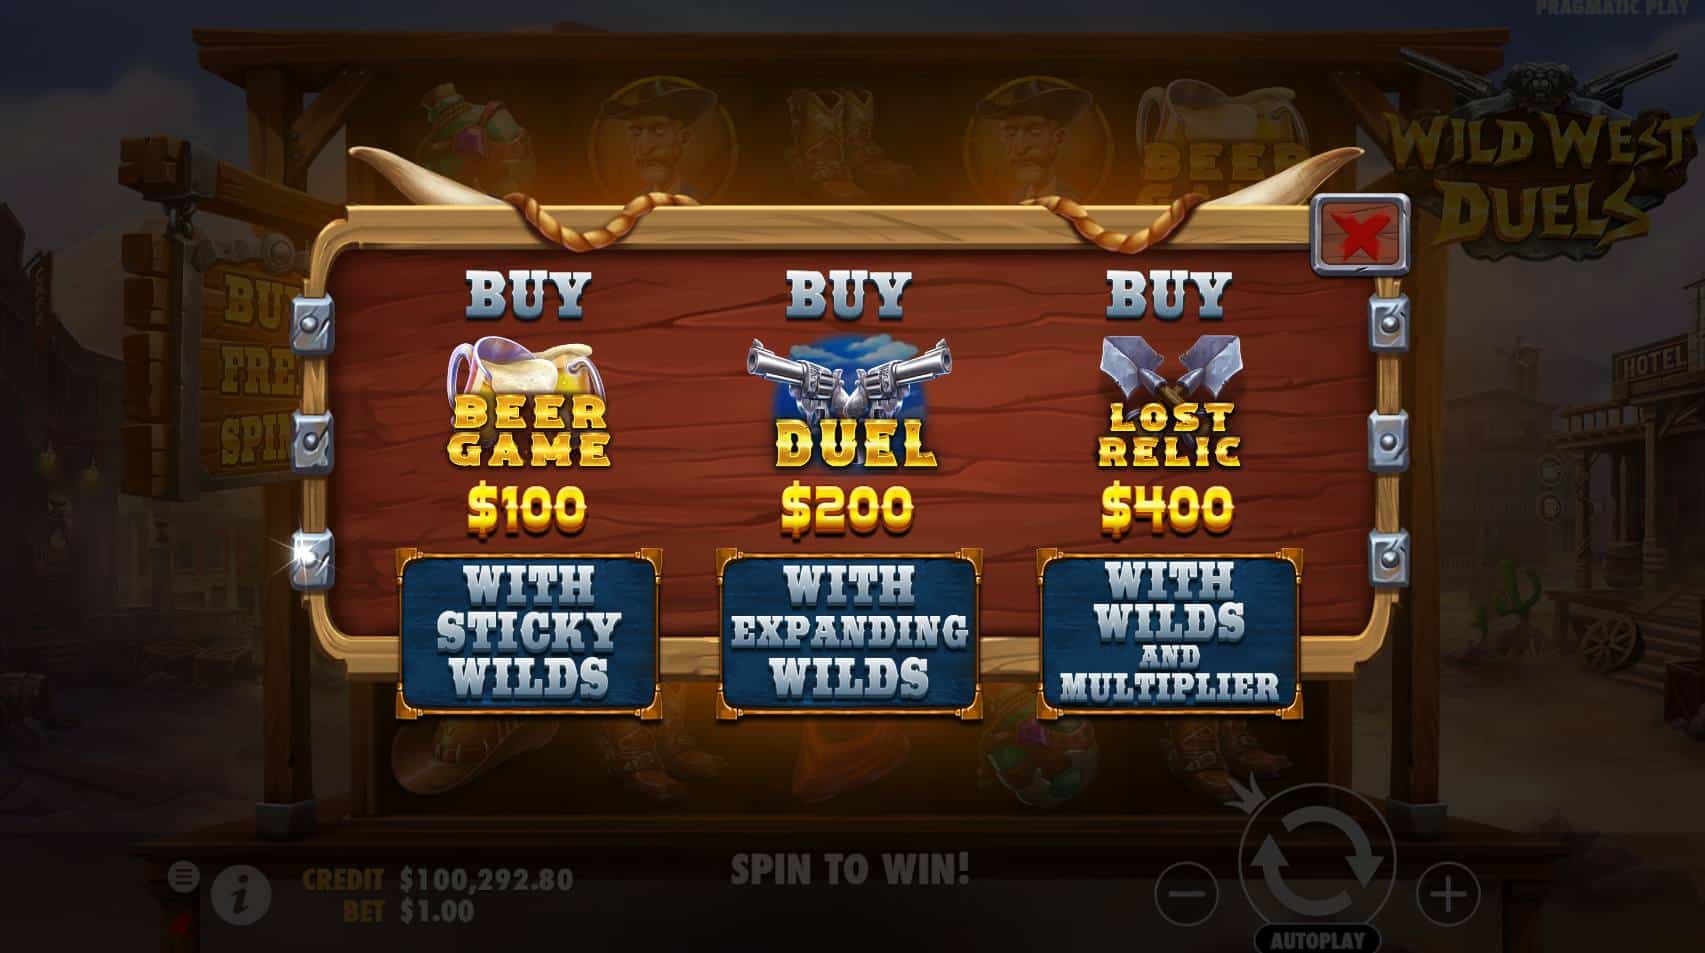 Wild West Duels Bonus Buy